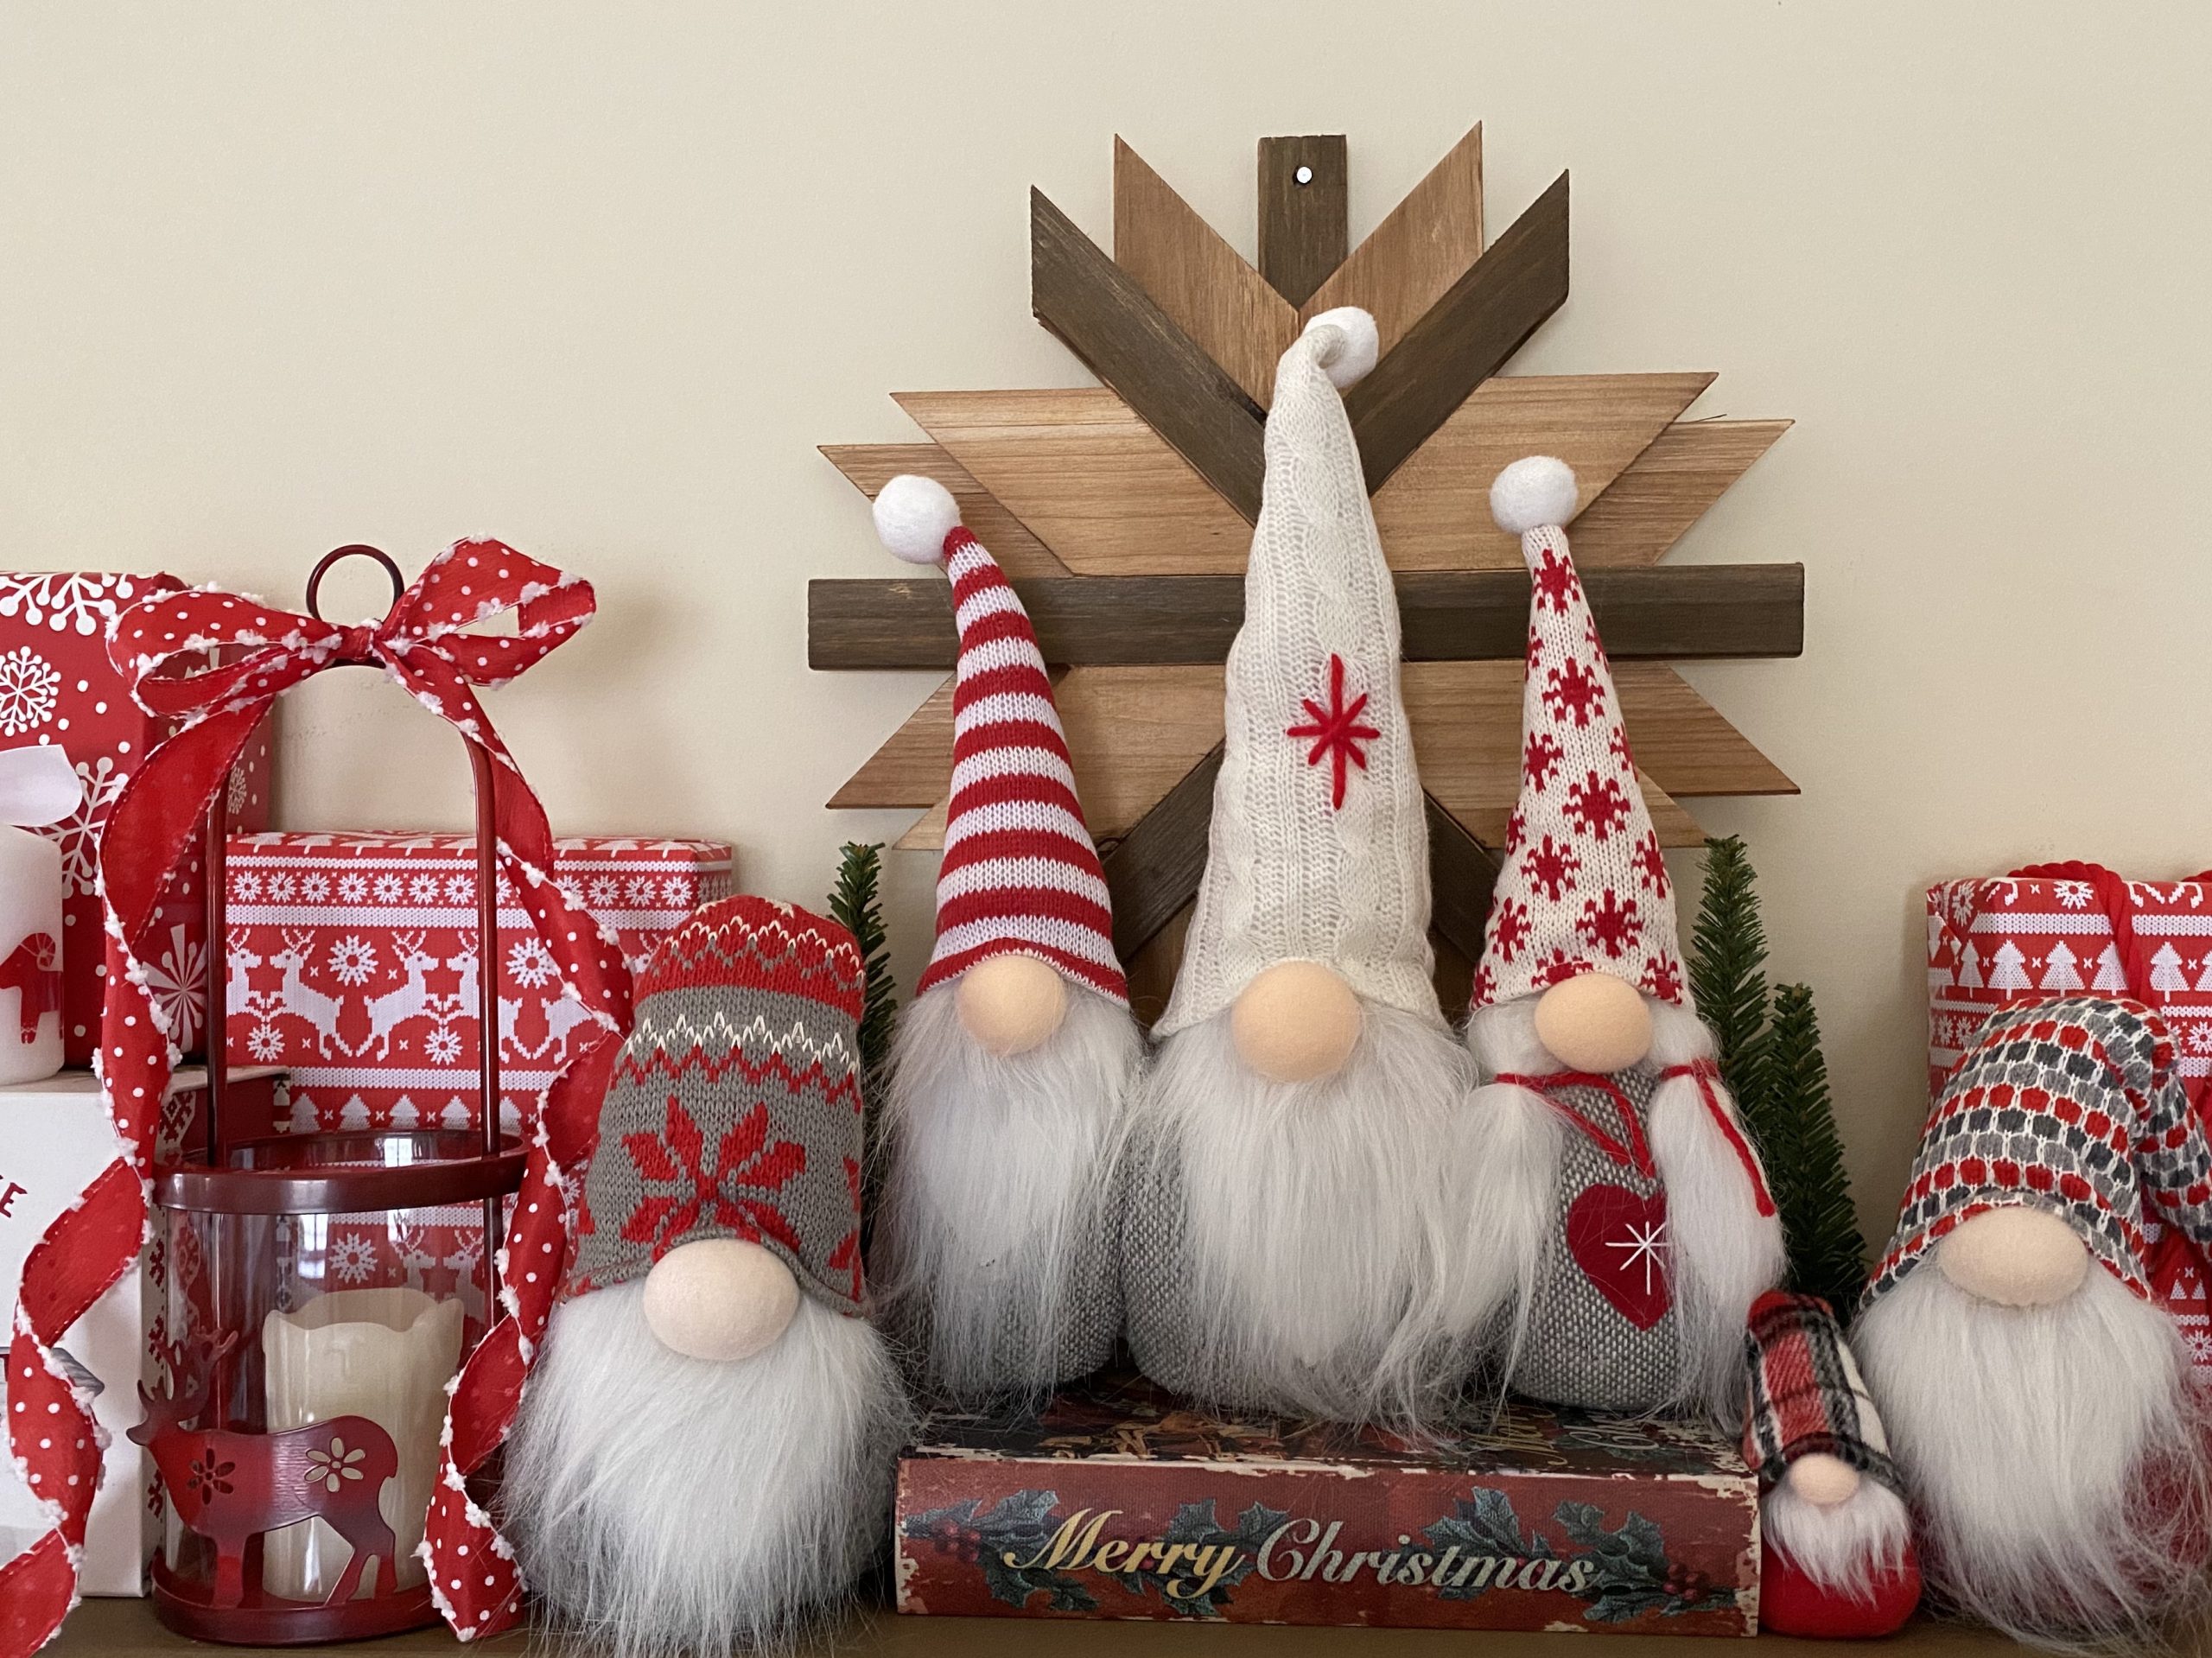 Gnome Christmas Decorations - Christmas Decorations Indoor Home Decor,  Christmas Table Decorations, Great Gnome Christmas Decorations with Tree  for